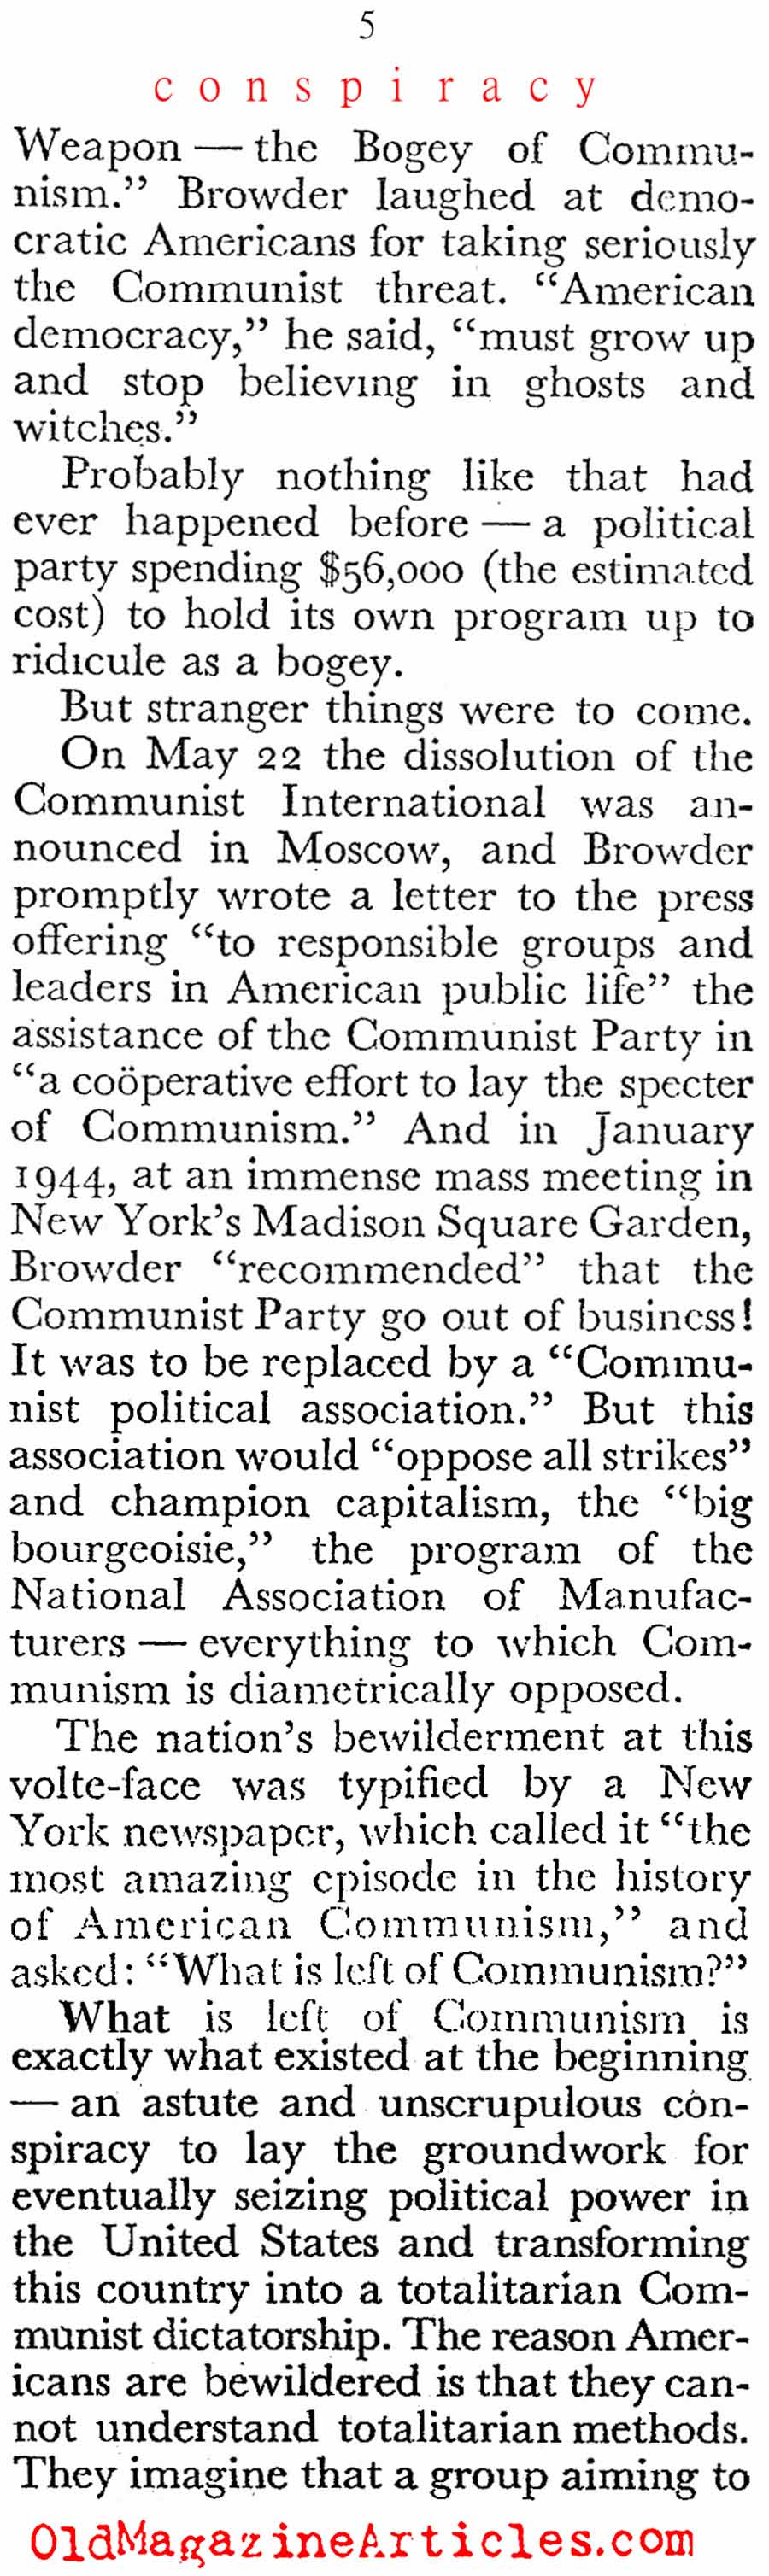 Warnings From A Soviet Defector (Reader's Digest, 1944)